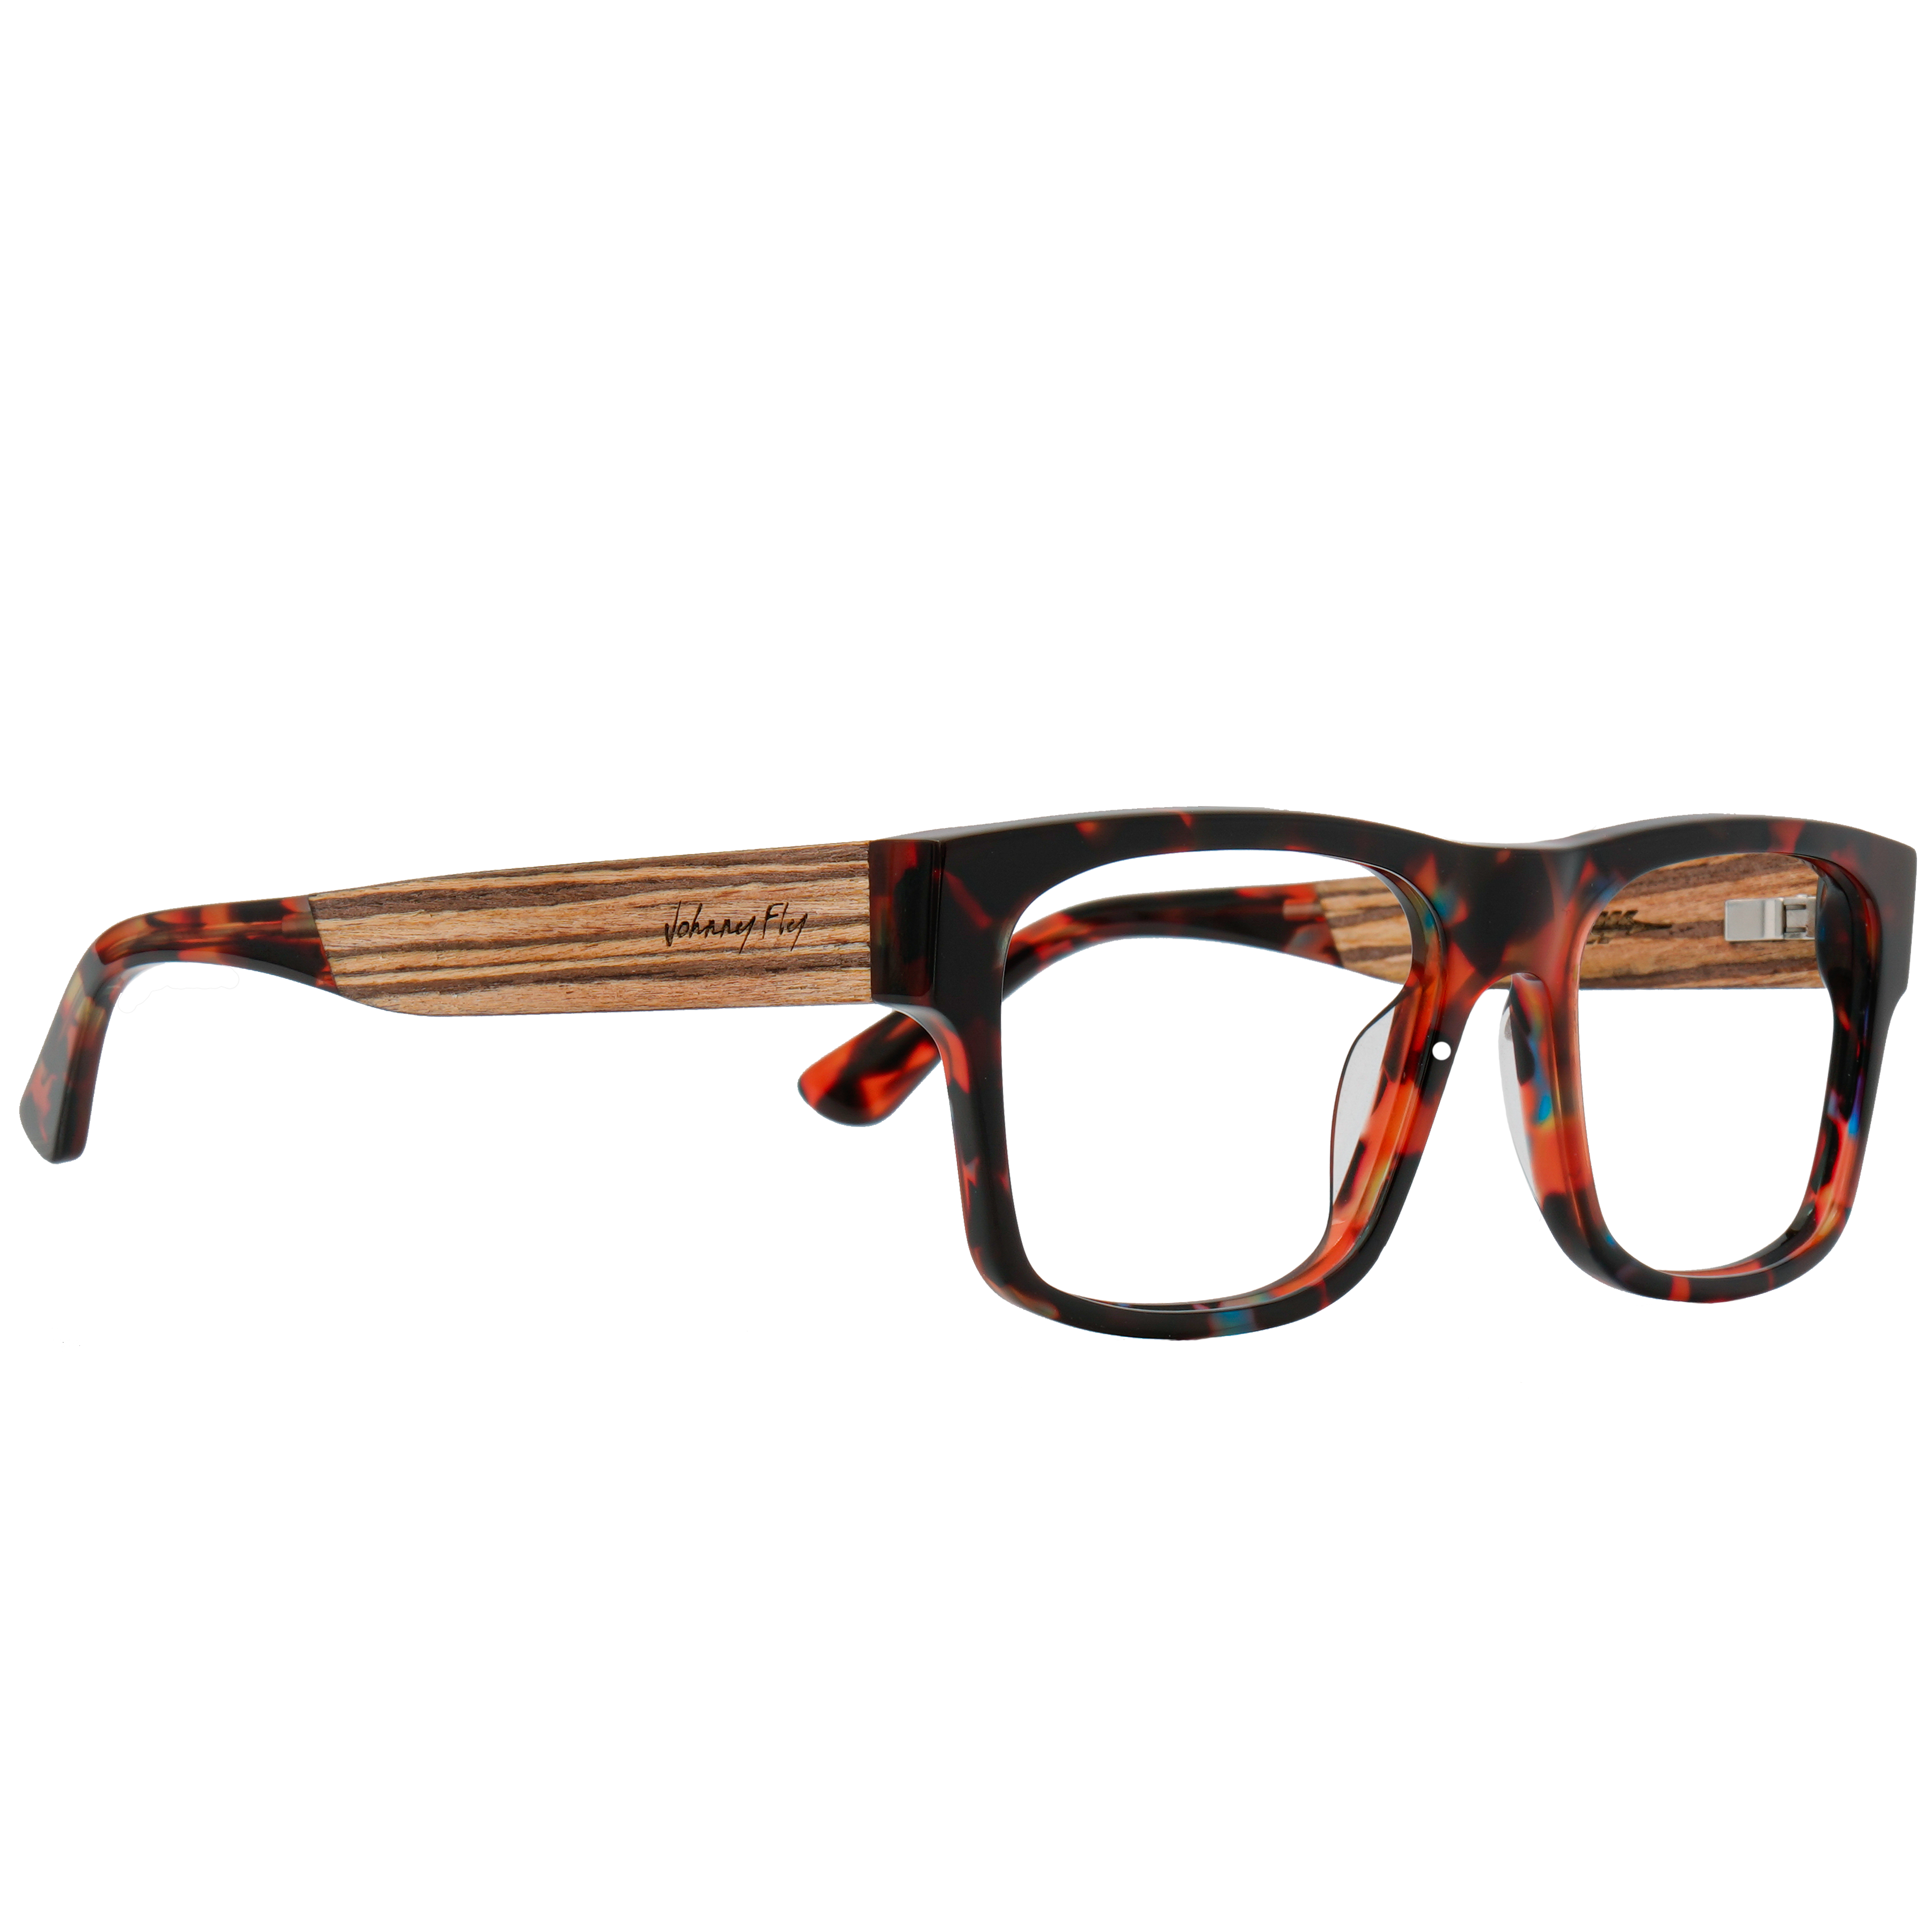 ARROW Frame - Space - Eyeglasses Frame - Johnny Fly Eyewear #color_space